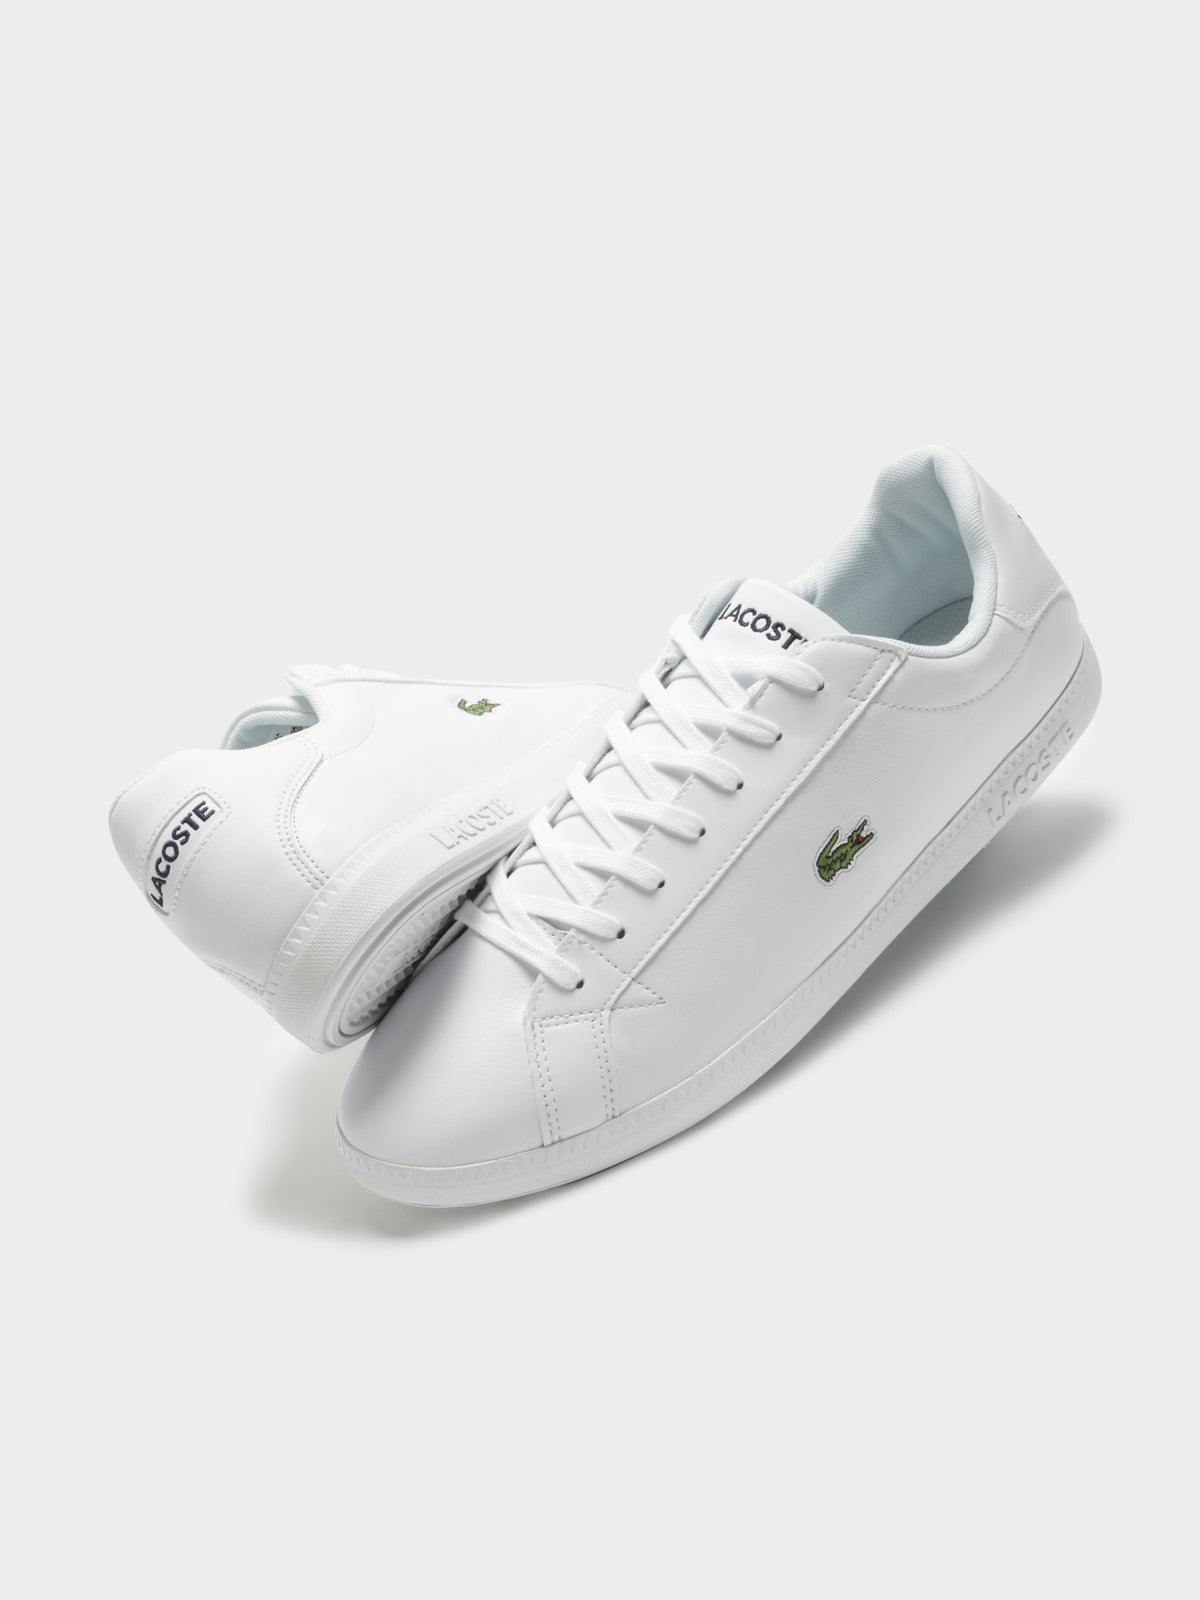 Mens Graduate BL 1 Sneakers in White